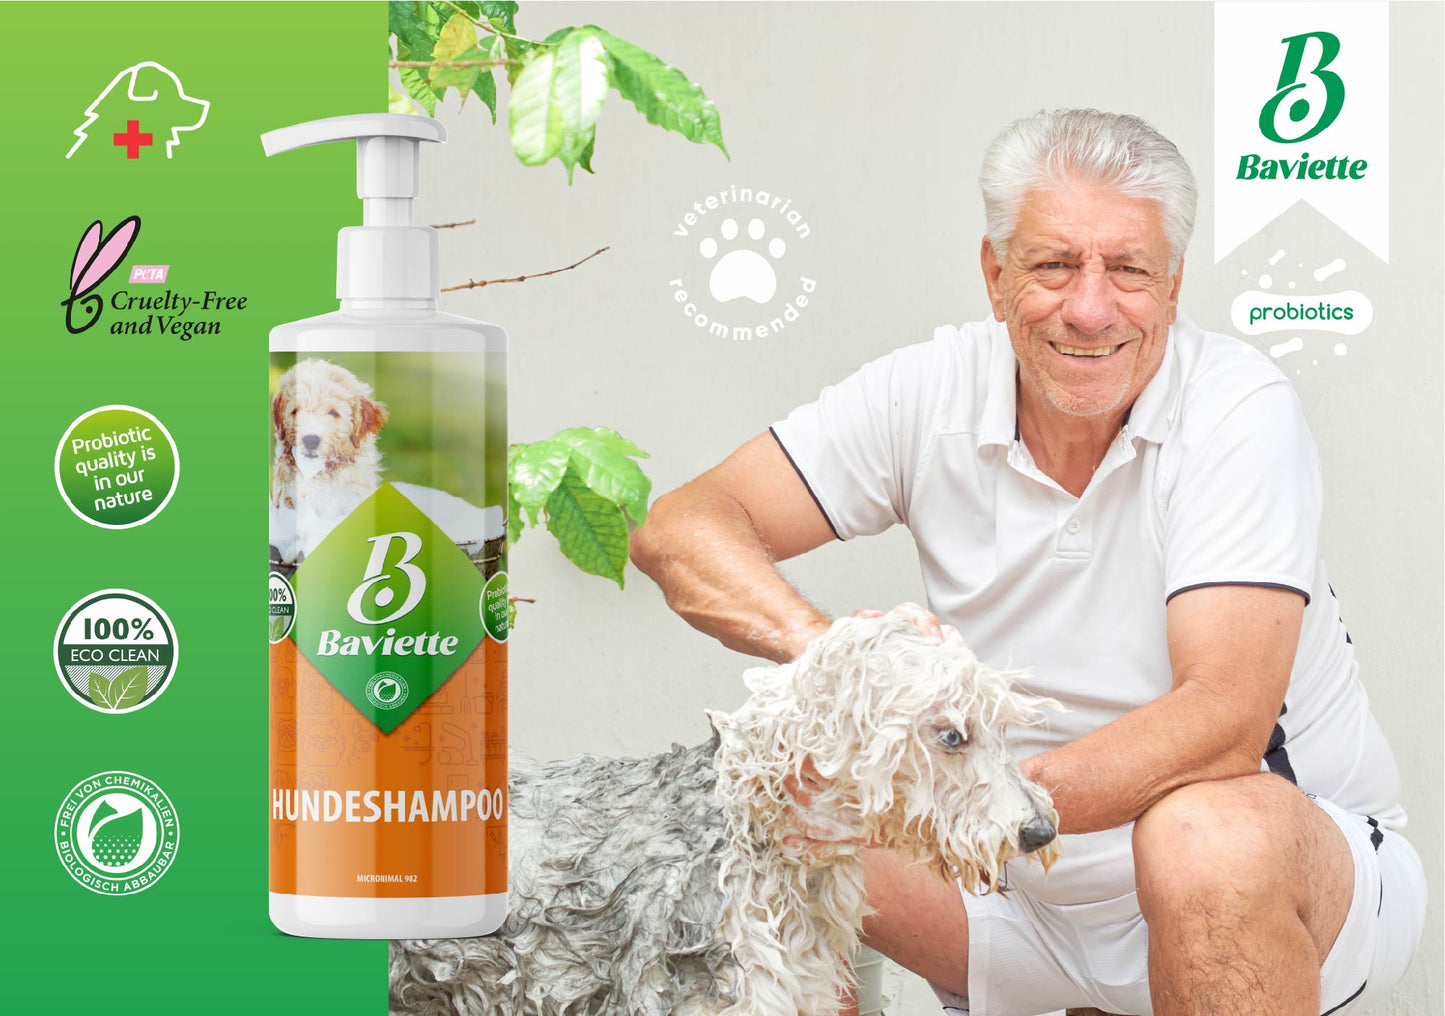 
                  
                    Dog shampoo
                  
                